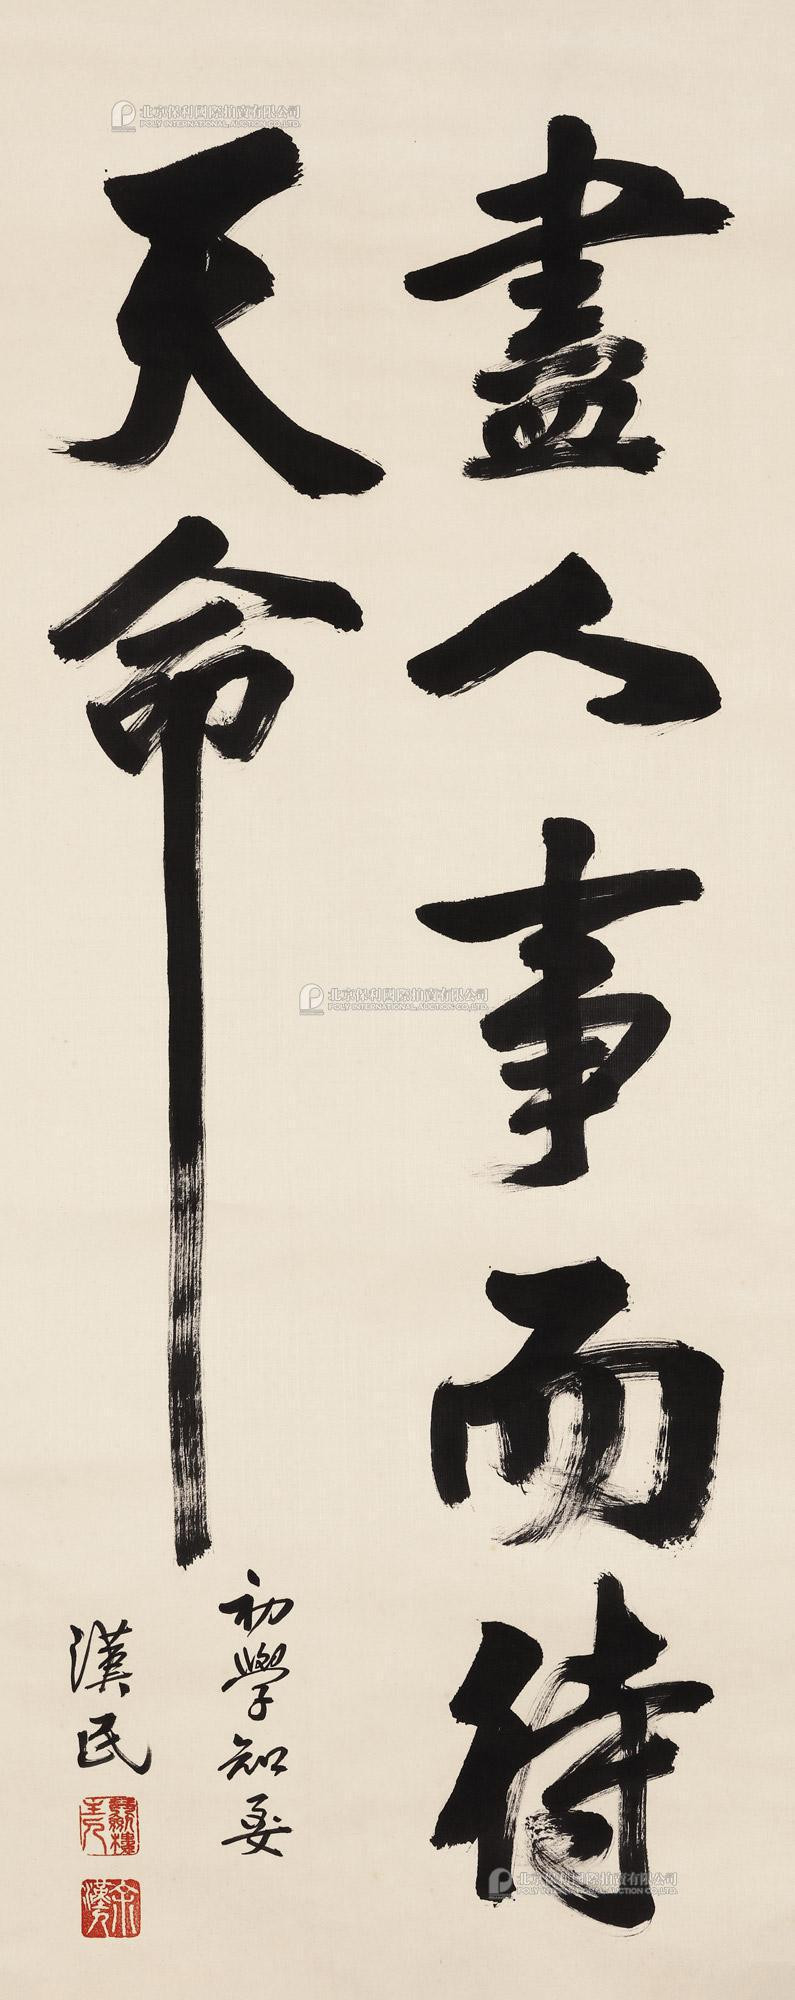 Calligraphy by Hu Hanmin